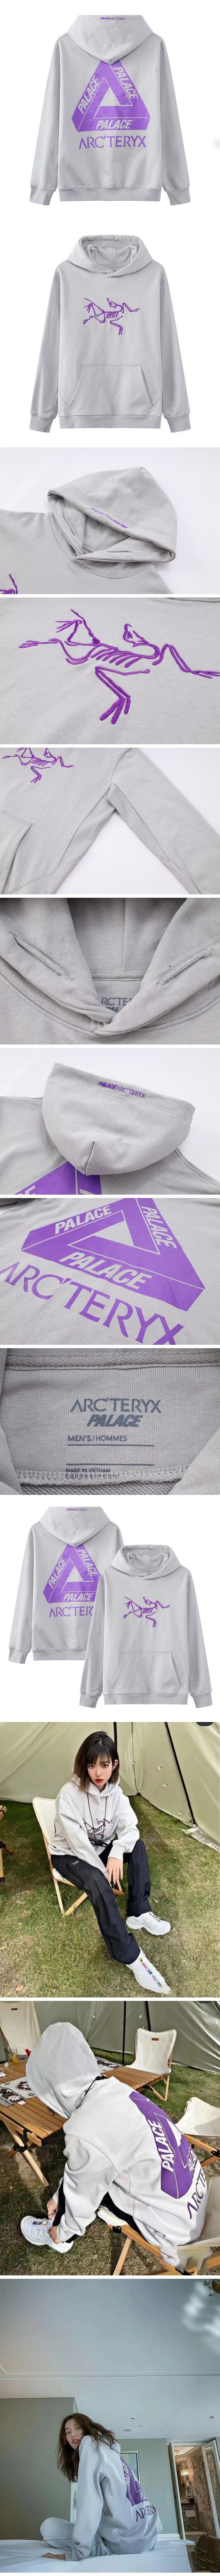 ARC'TERYX x PALACE Logo Hoodie Grey アークテリクス x パレス ロゴパーカー グレー